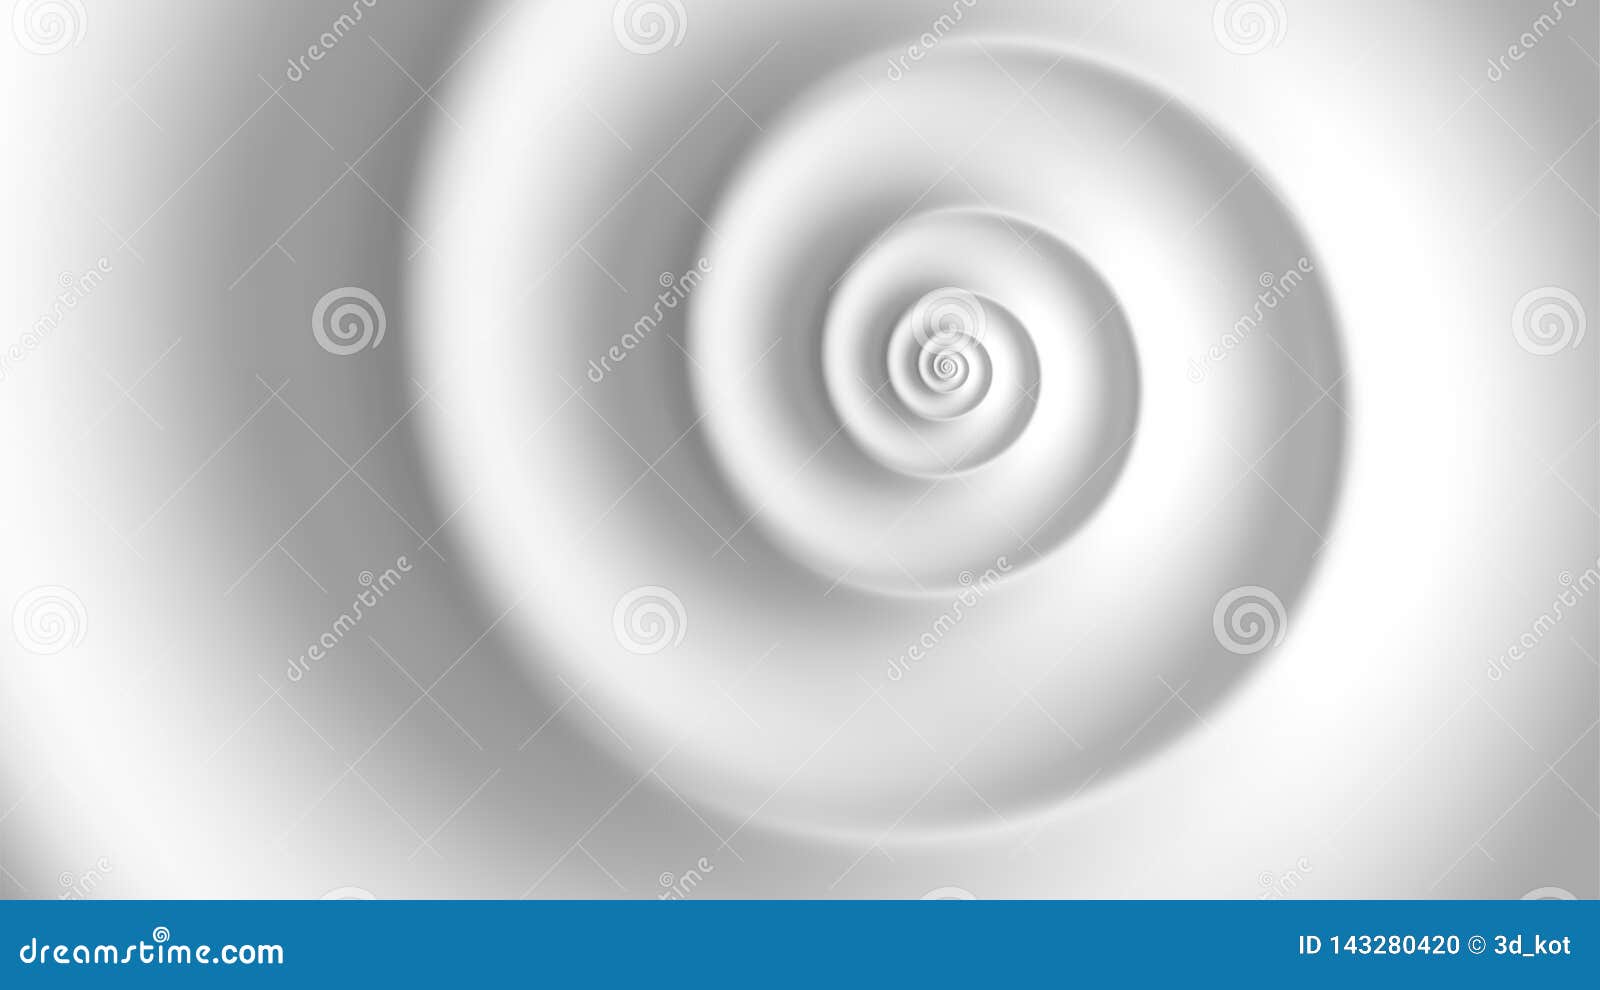 fibonacci spiral white abstract  background. golden ratio